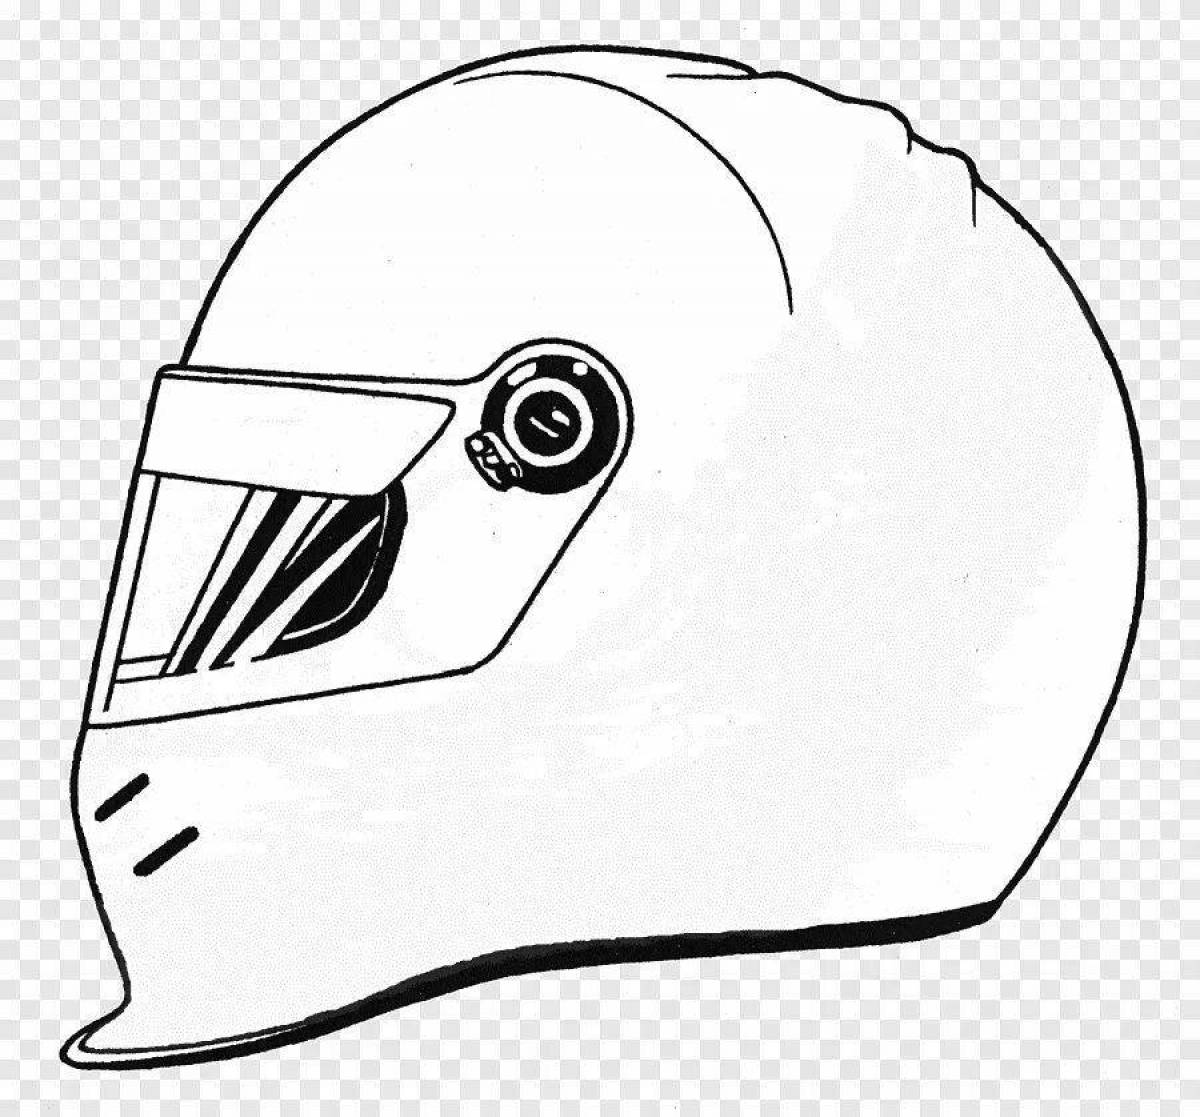 A striking helmet coloring page